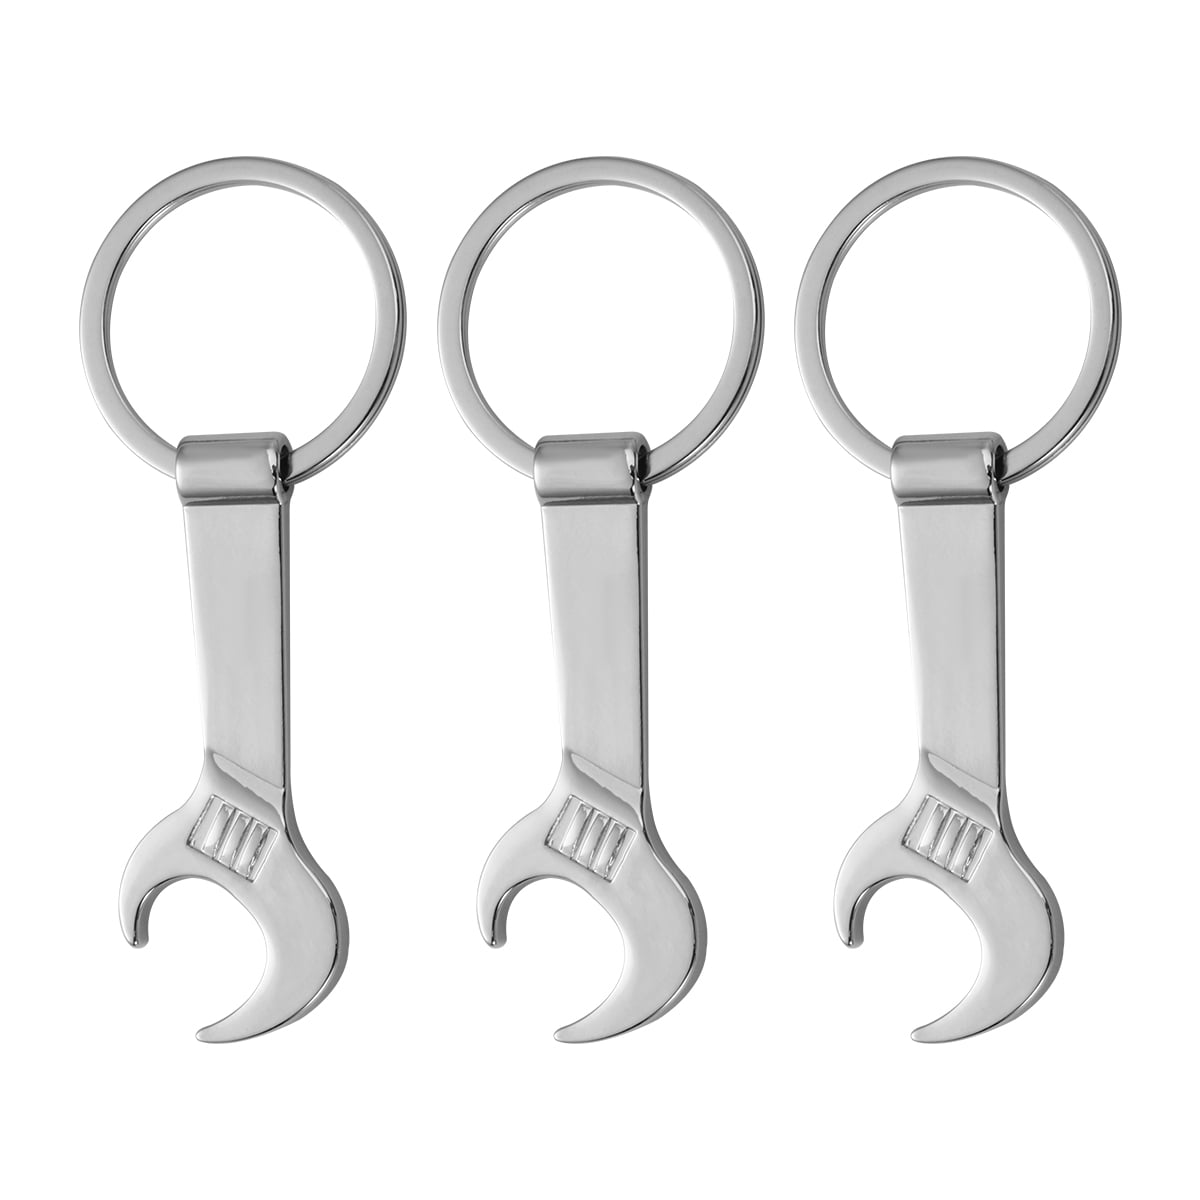 Wrench Shape Bottle Opener Key Ring Chain Keychain Opener Practical Ring  1PCS